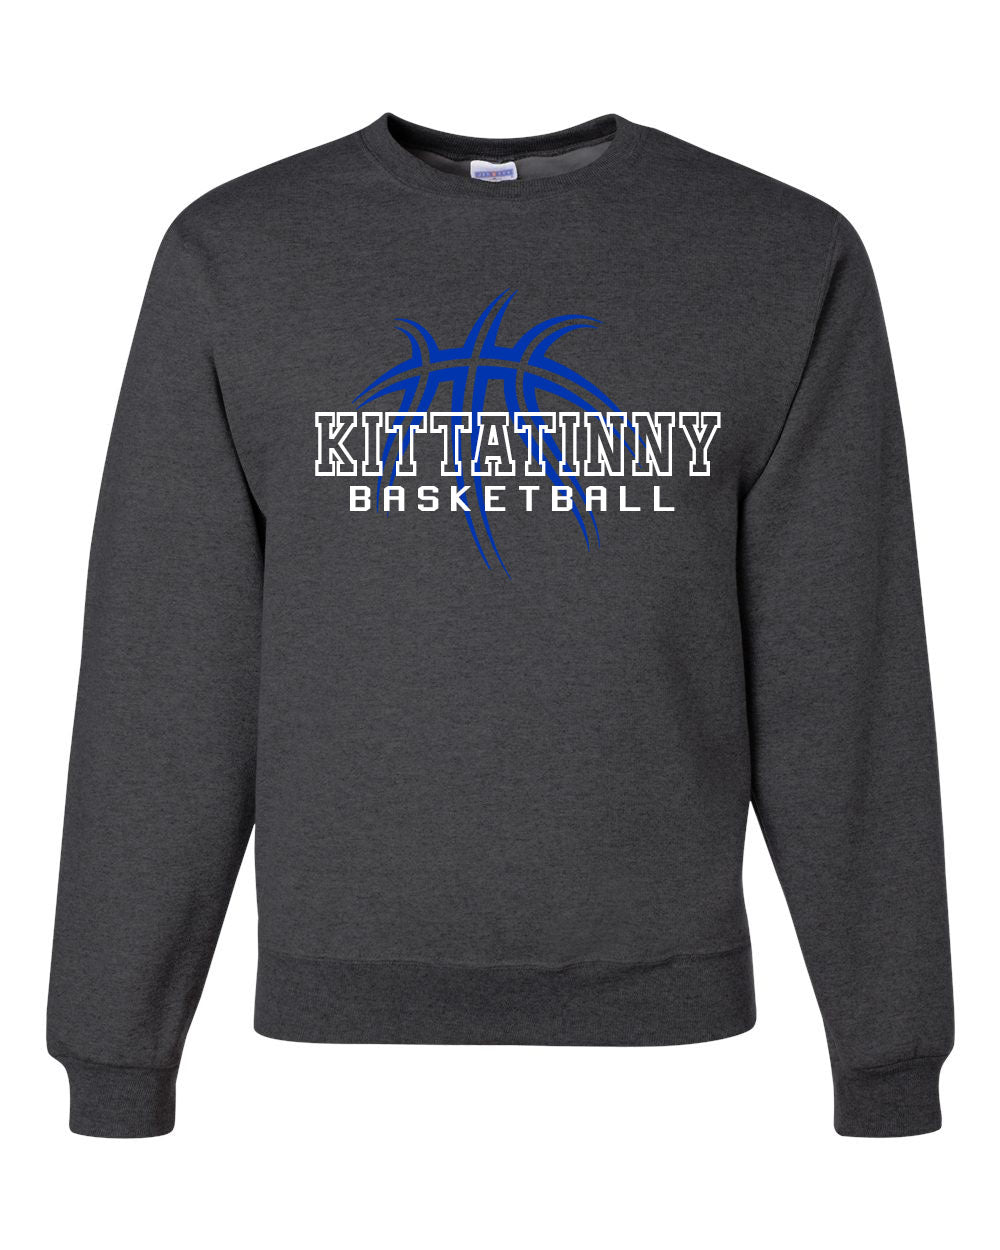 Kittatinny Basketball Design 4 non hooded sweatshirt